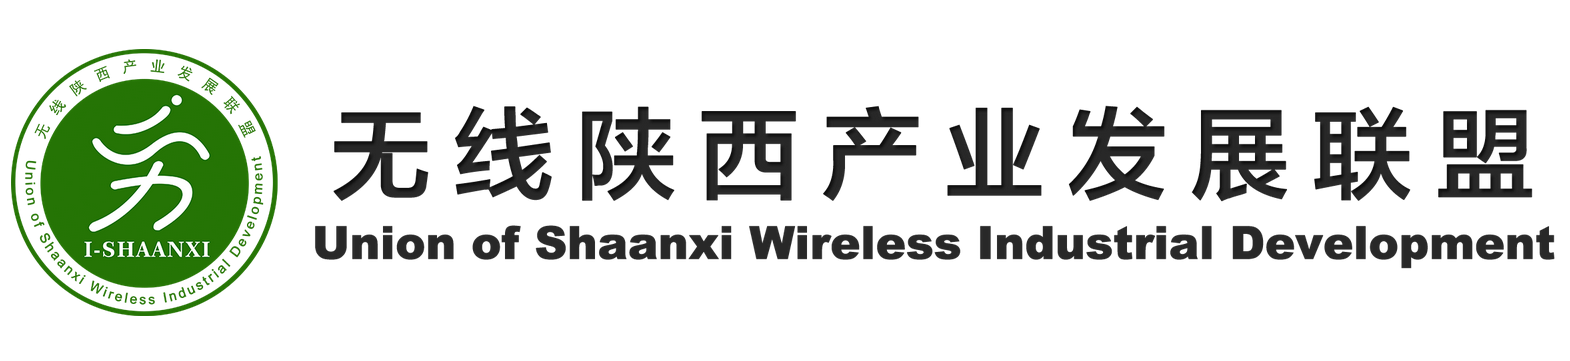 Union of Shaanxi Wireless Industrial Development